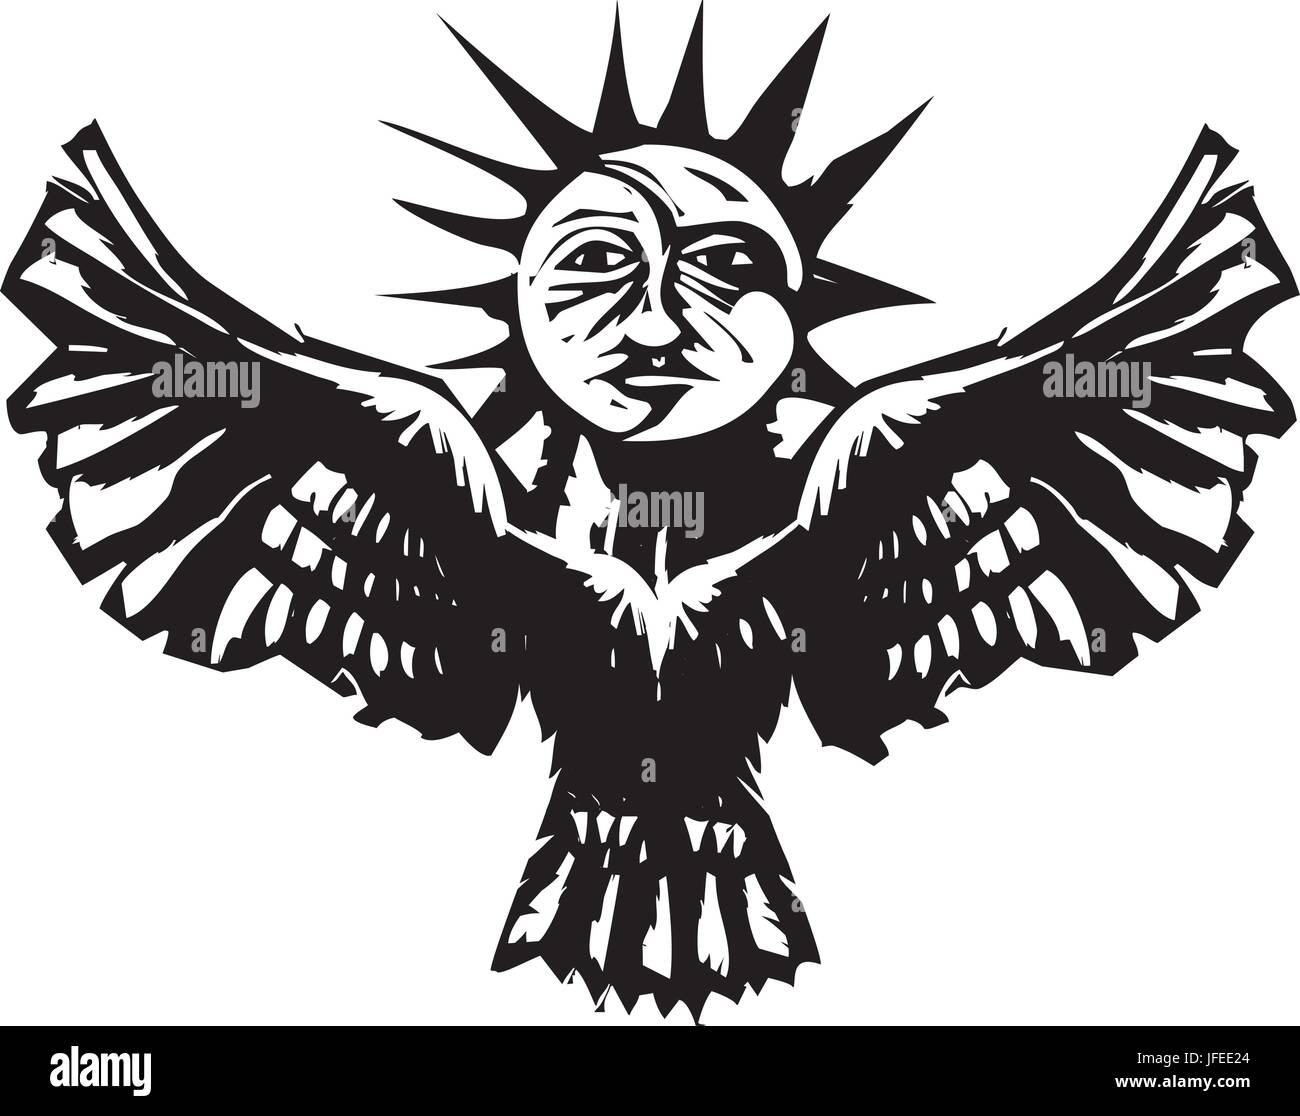 Woodcut style image of a sun and moon on an owl Egyptian Ba concept. Stock Vector